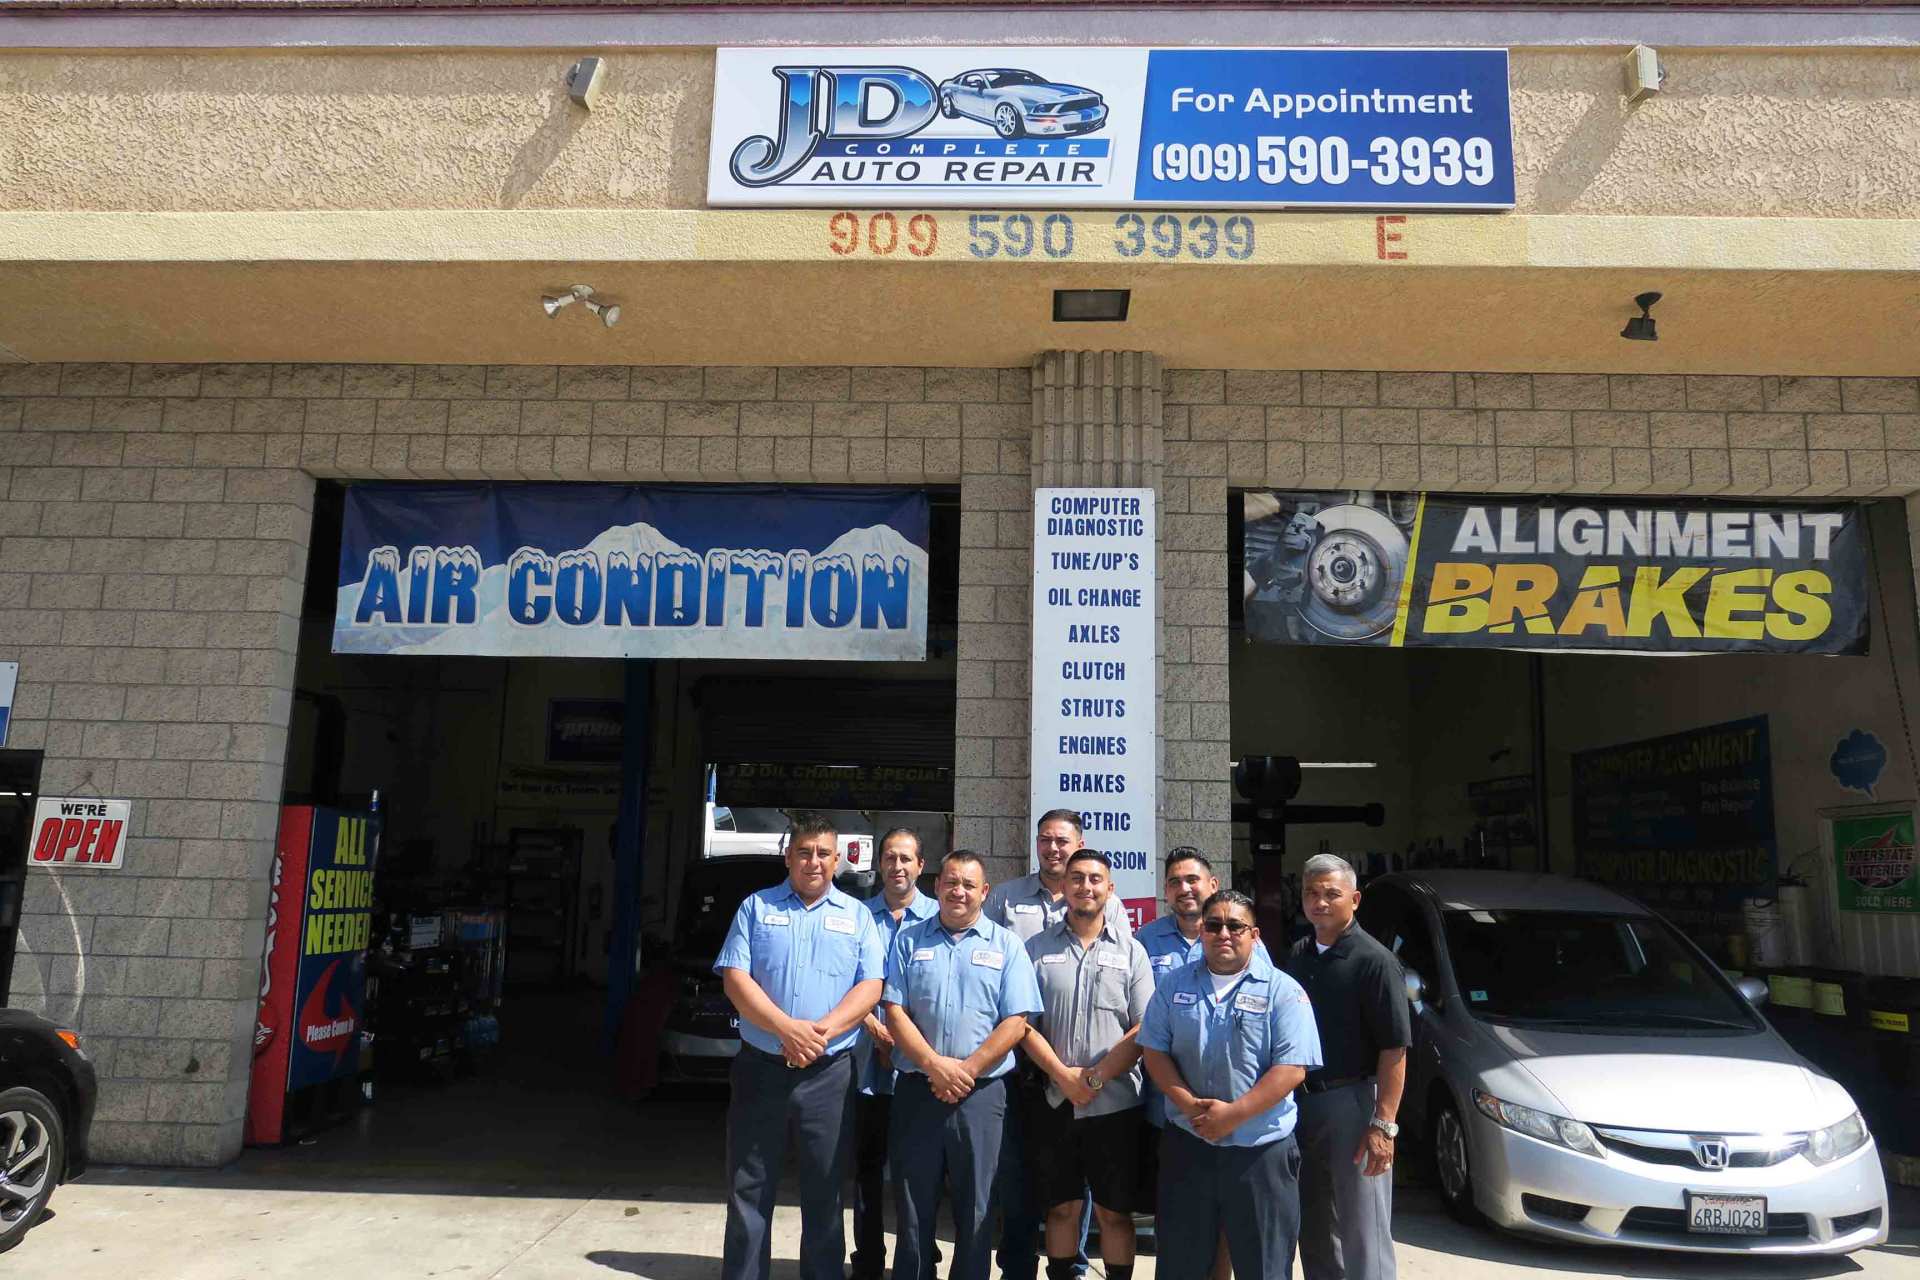 Brakes — Employees Of J D Complete Auto Repair in Ontario, California